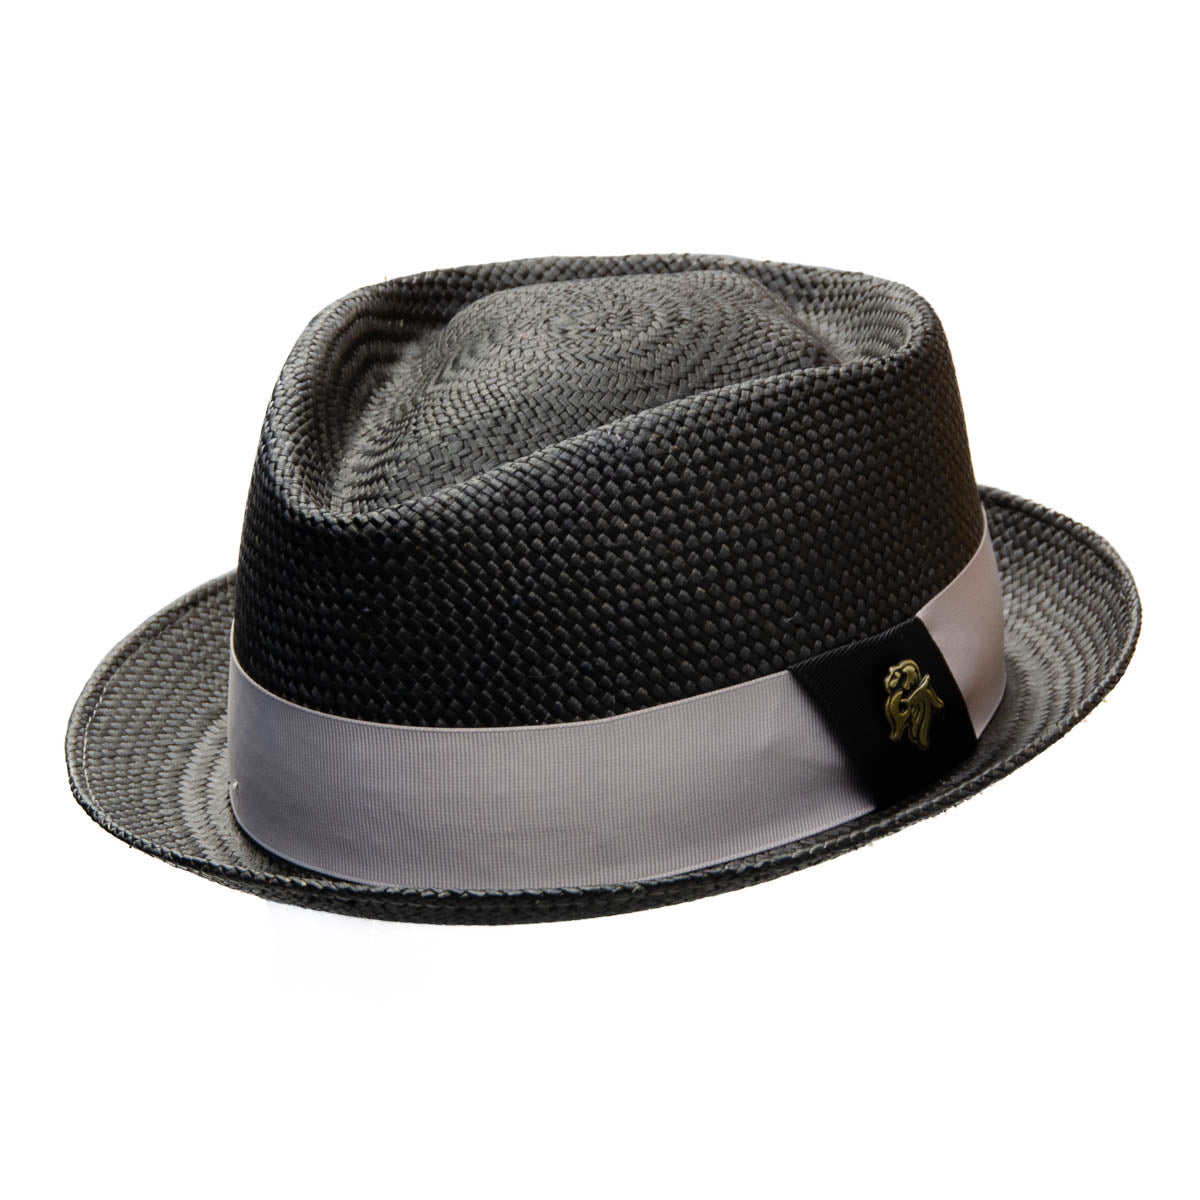 Diamond Contempo | Panama Hat